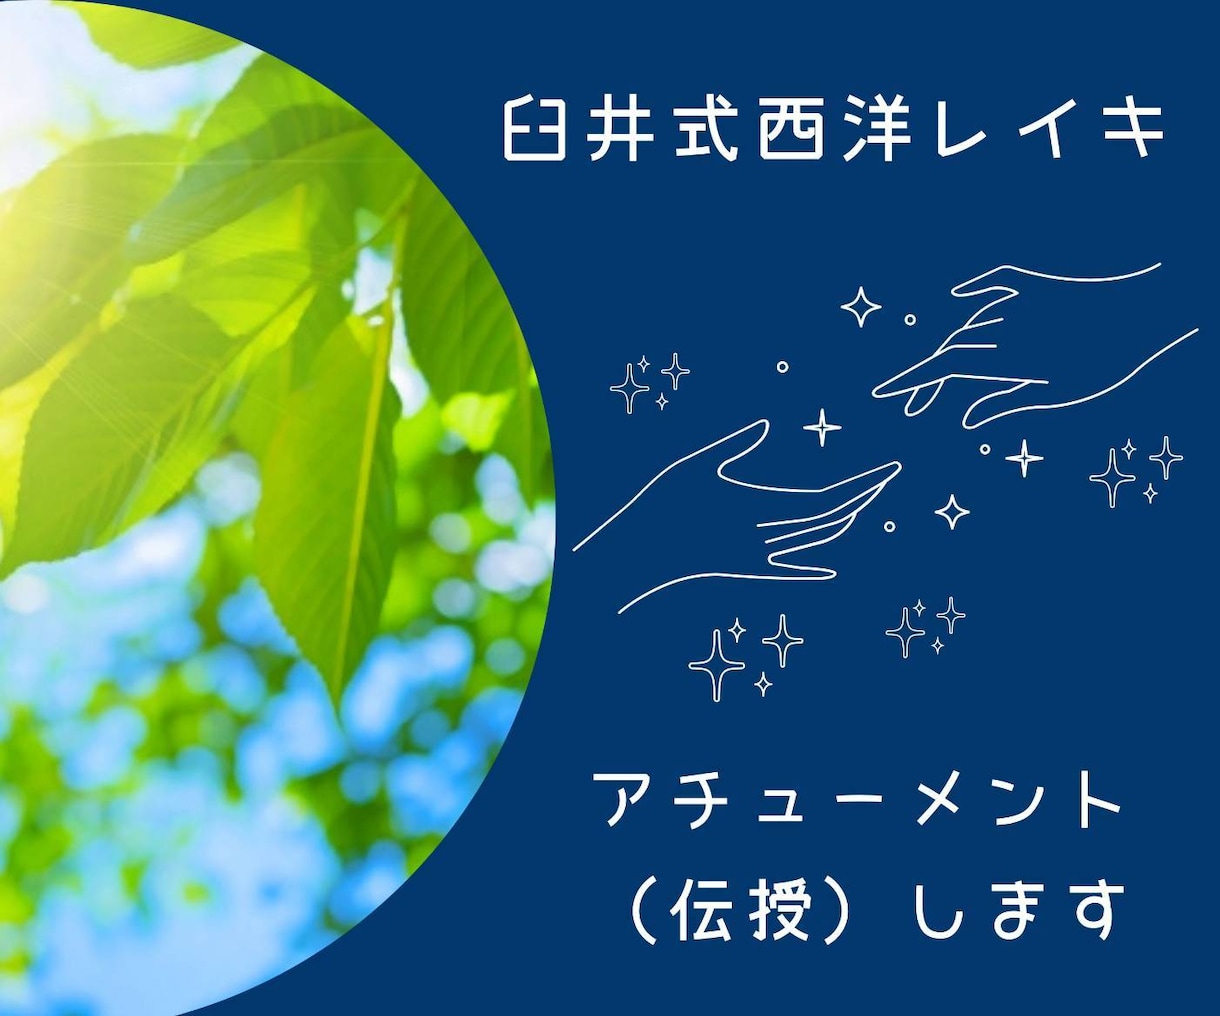 💬Coconara｜Usui style Western Reiki attunement (transmission)
               Good luck teacher @Tsumugi
                5.0
  …